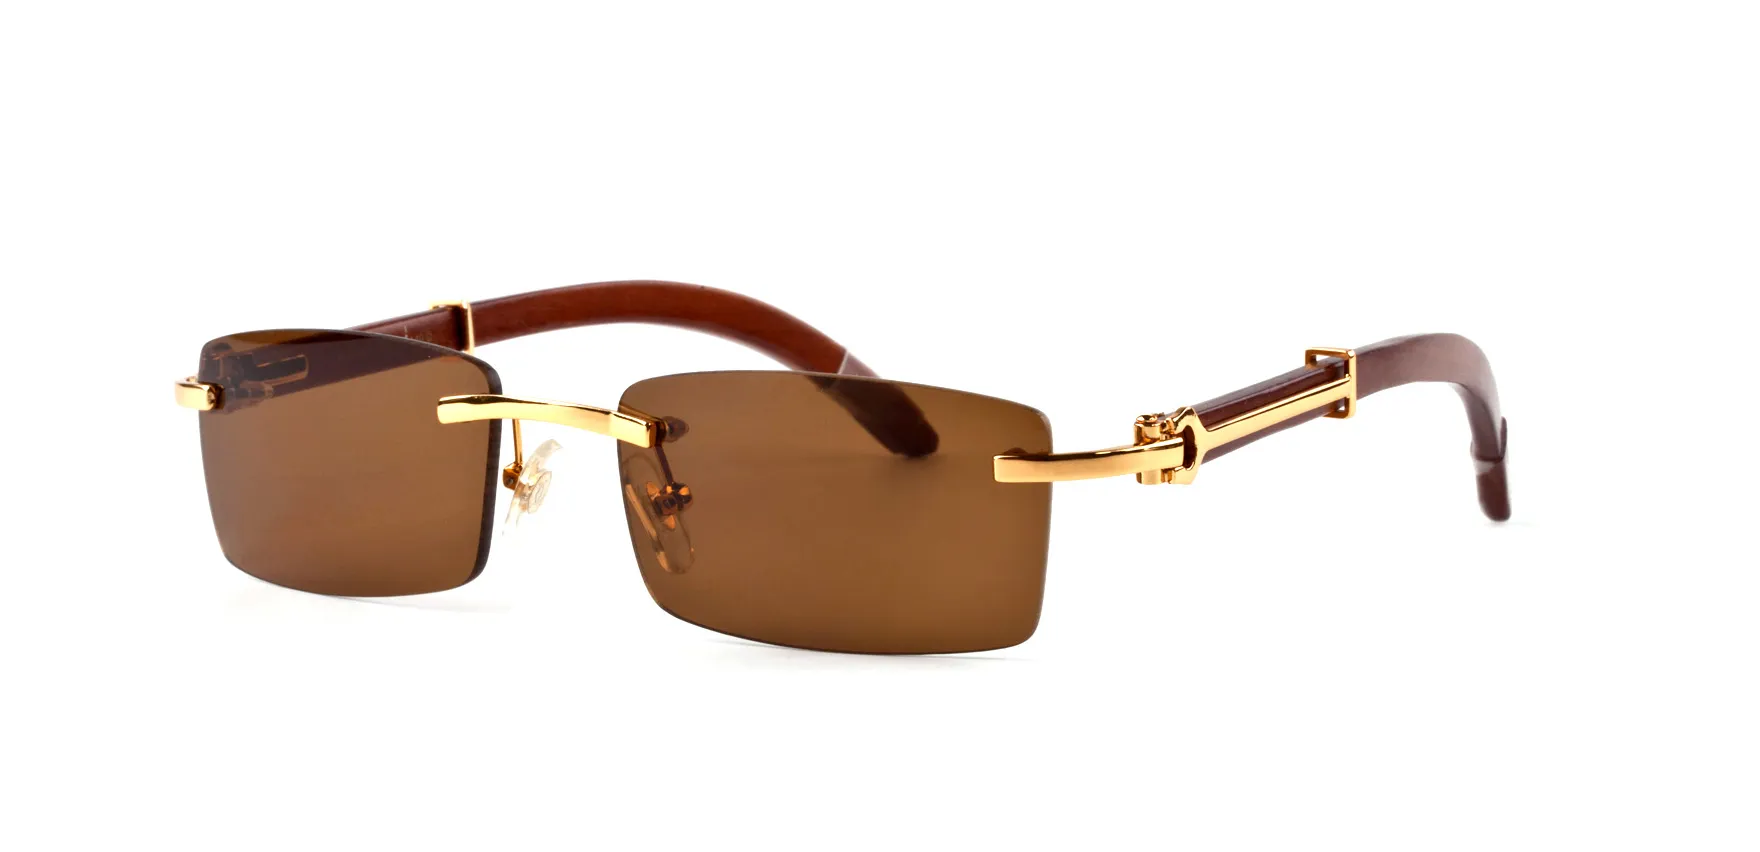 WholesaleNew arrival 2018 brand sunglasses for men women buffalo horn glasses rimless designer bamboo wood sunglasses with box case lunettes